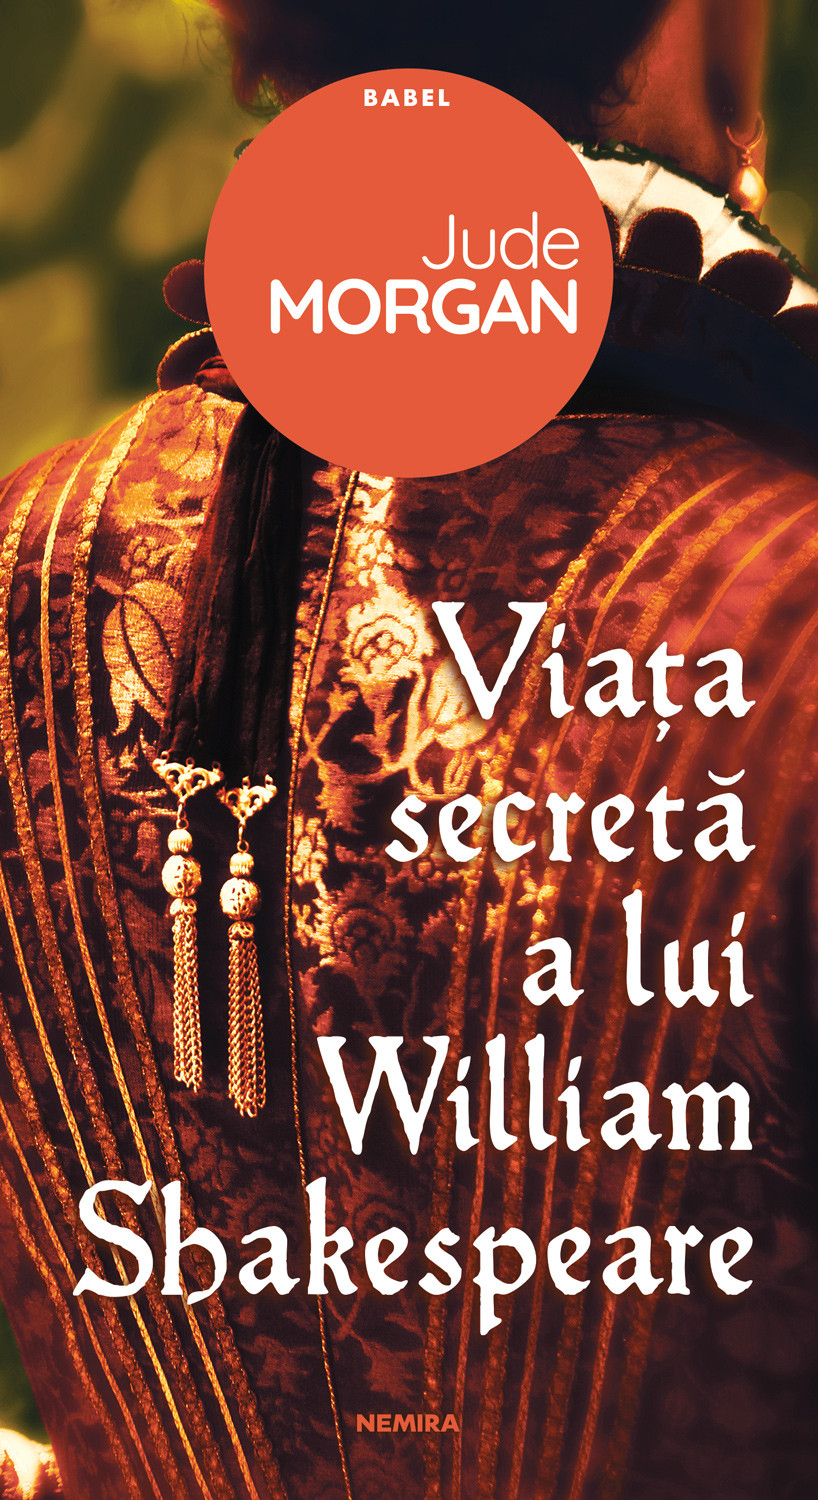 Viata secreta a lui William Shakespeare | Jude Morgan carturesti.ro poza bestsellers.ro